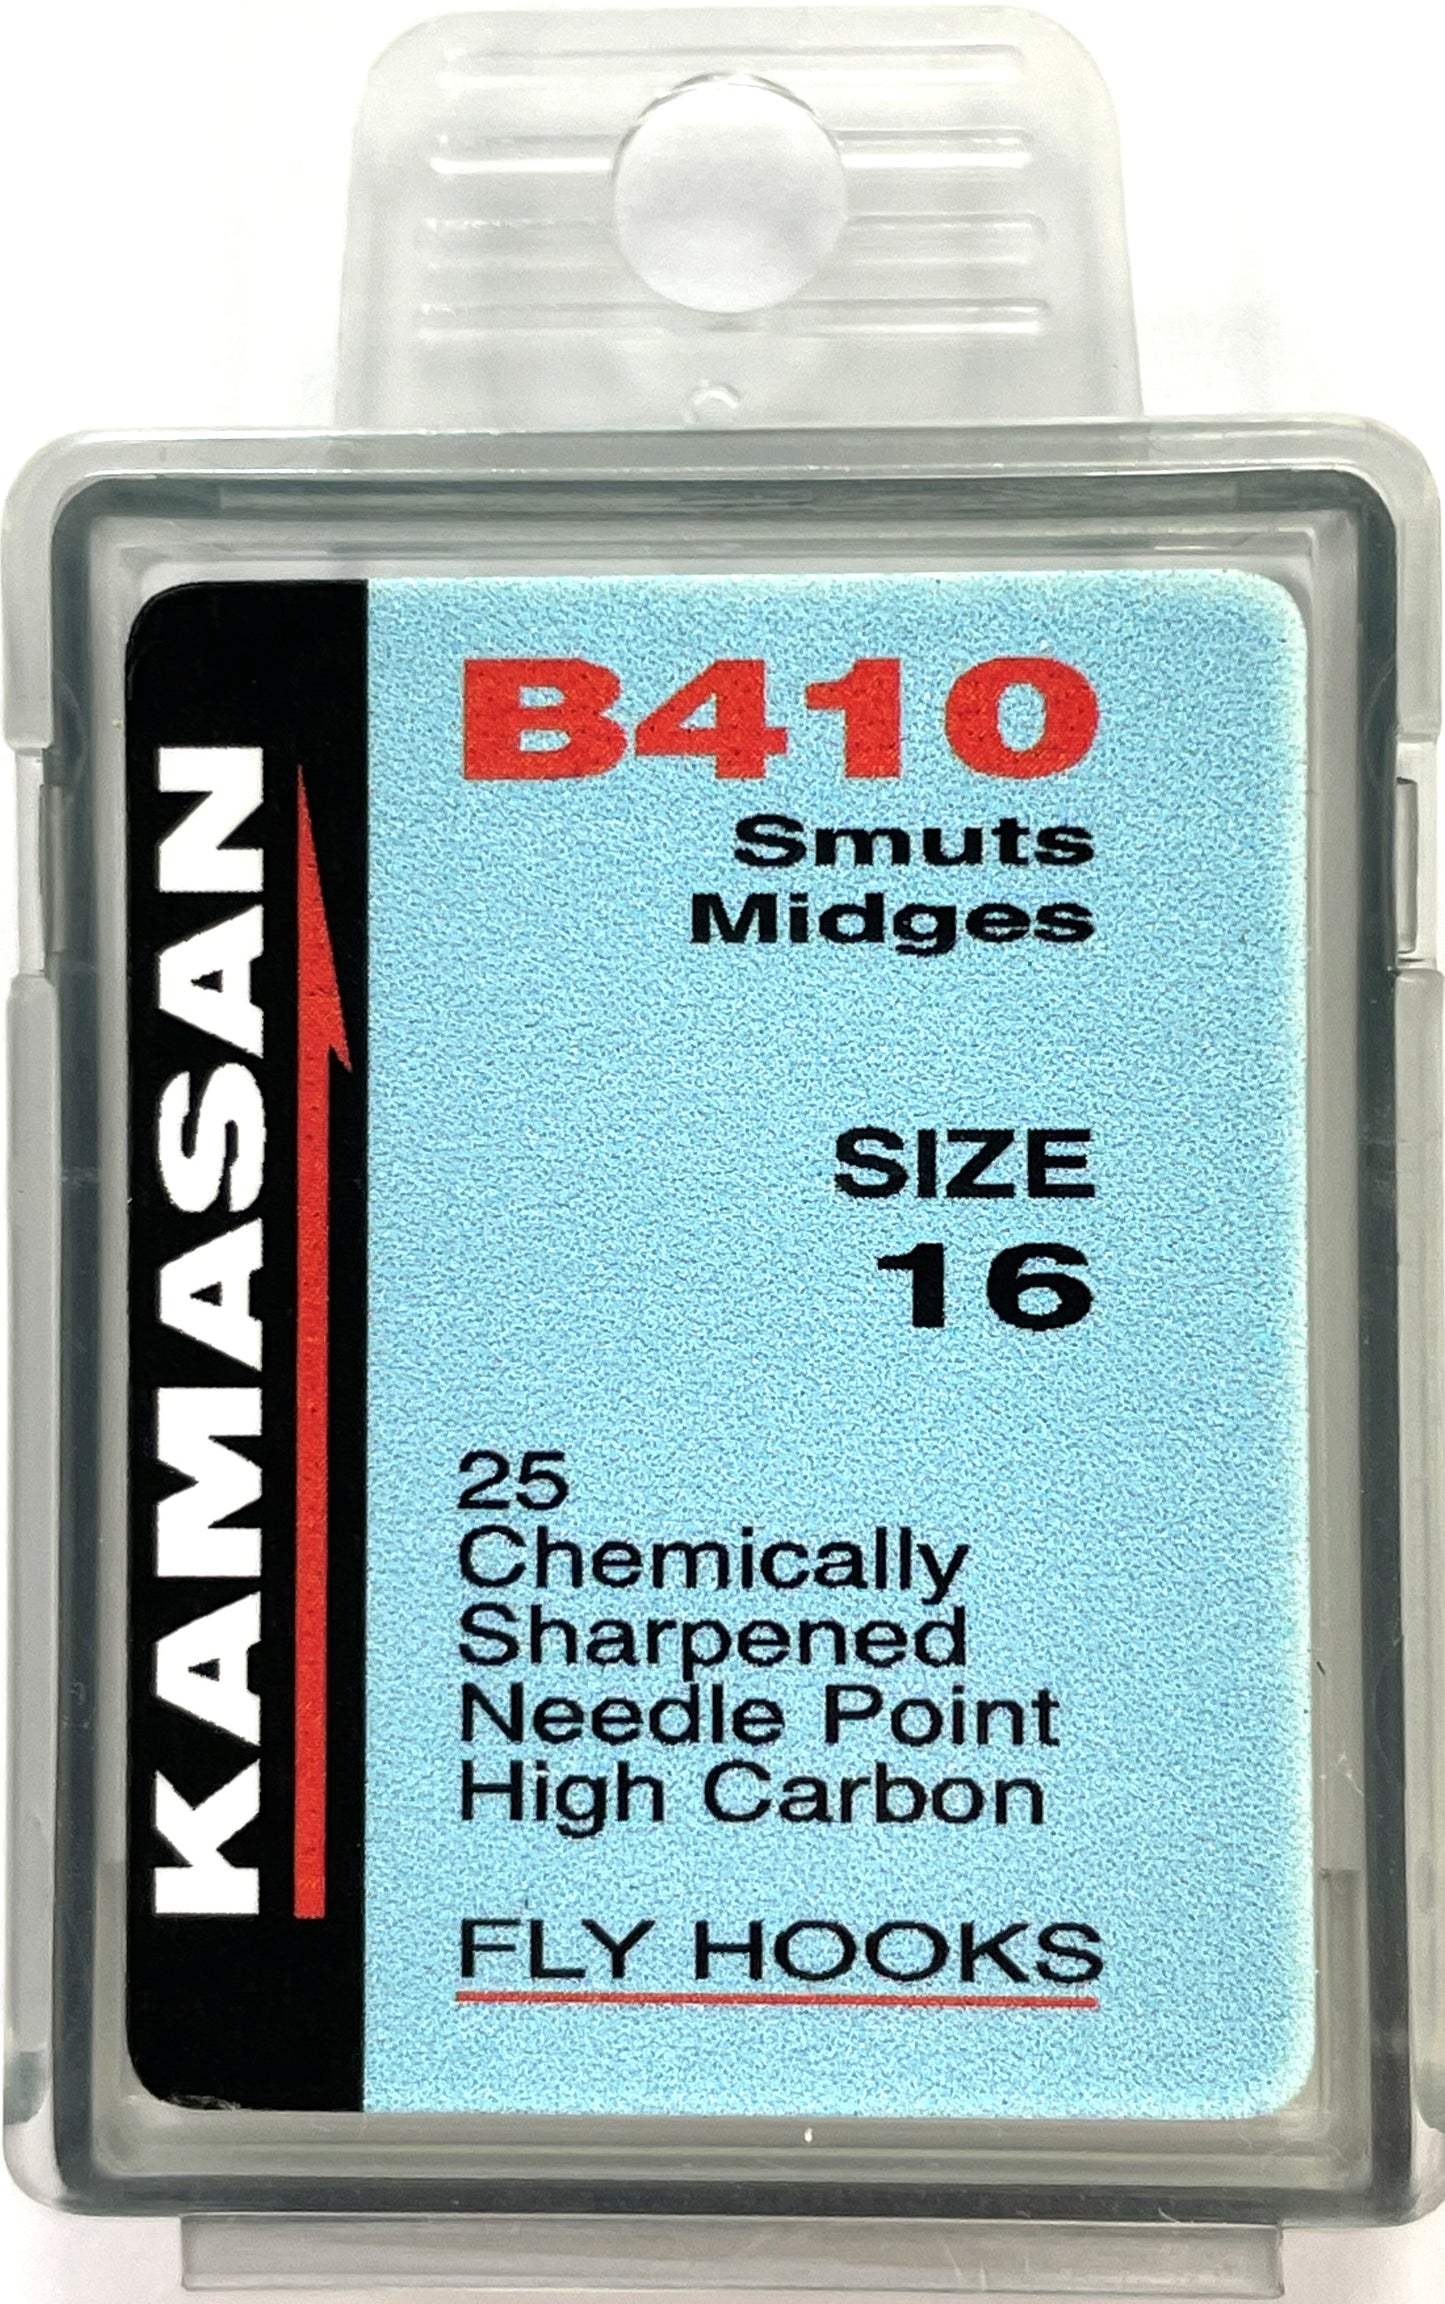 Kamasan B410 Smuts Midges Fly Hooks (Size 16)